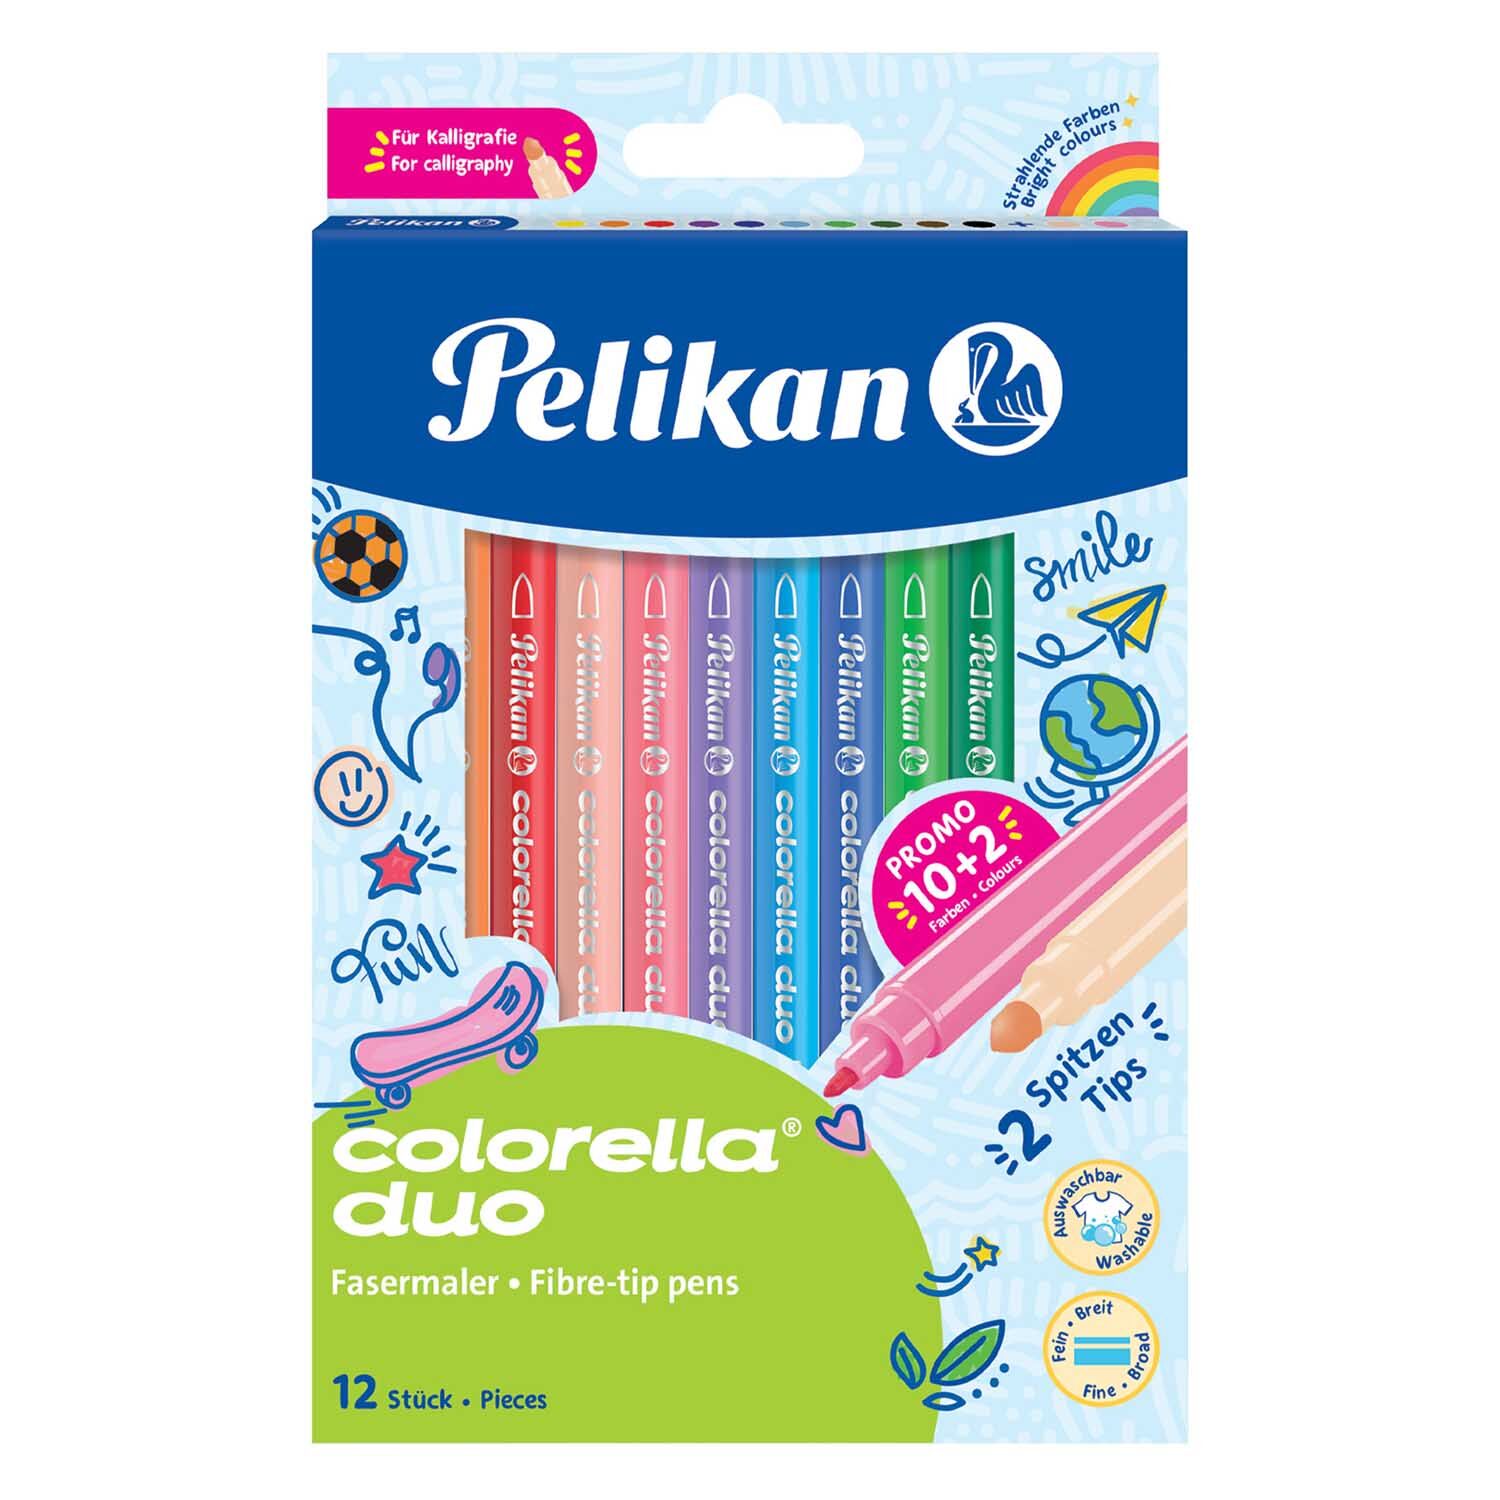 NEU Pelikan Filzstifte / Fasermaler Colorella Duo, 10+2 Farben